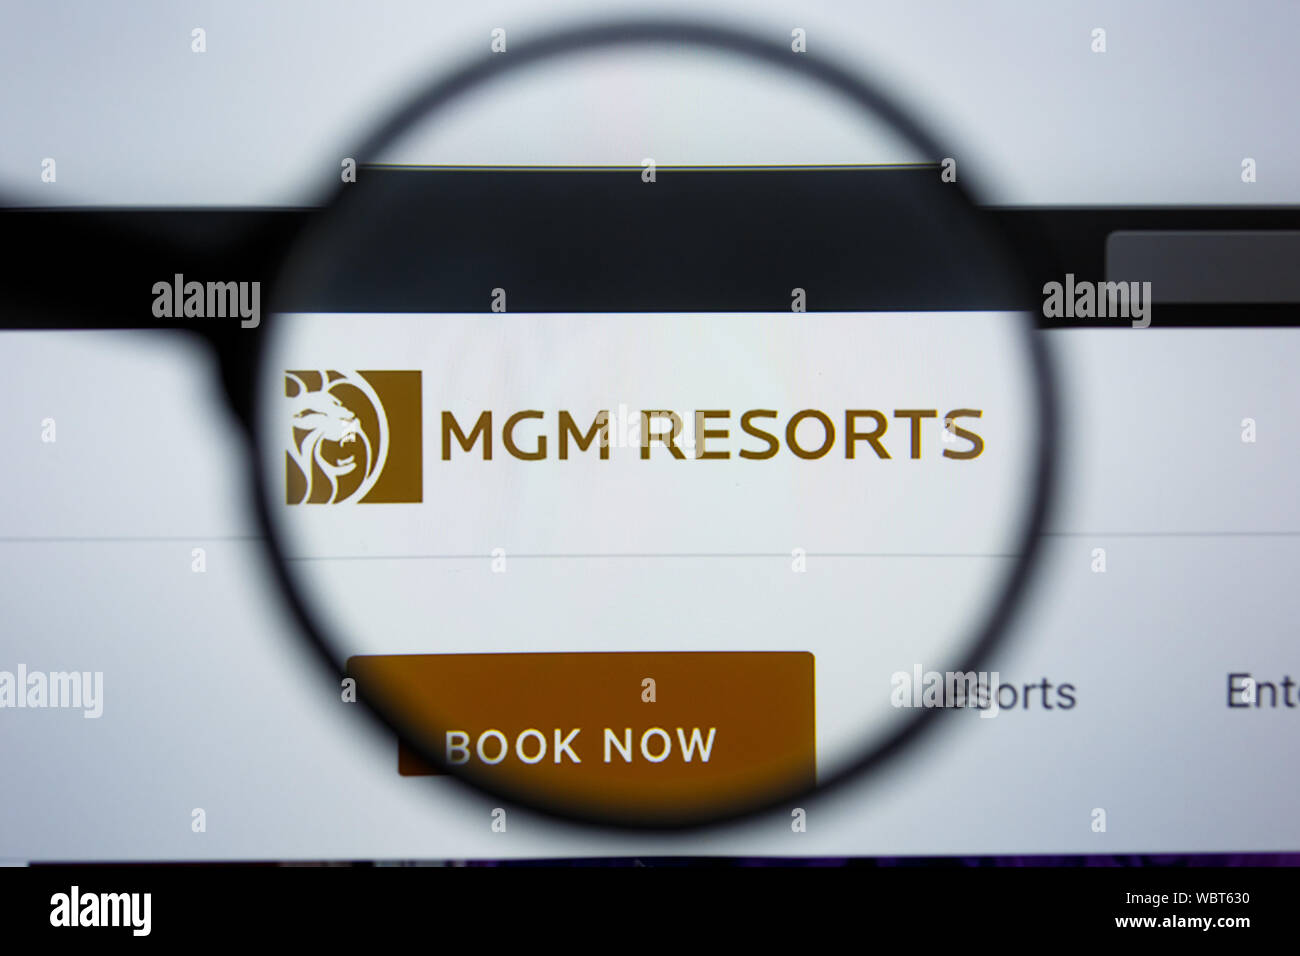 Los Angeles, California, USA - 21 Jule 2019: Illustrative Editorial of MGM RESORTS website homepage. MGMRESORTS.COM logo visible on display screen. Stock Photo